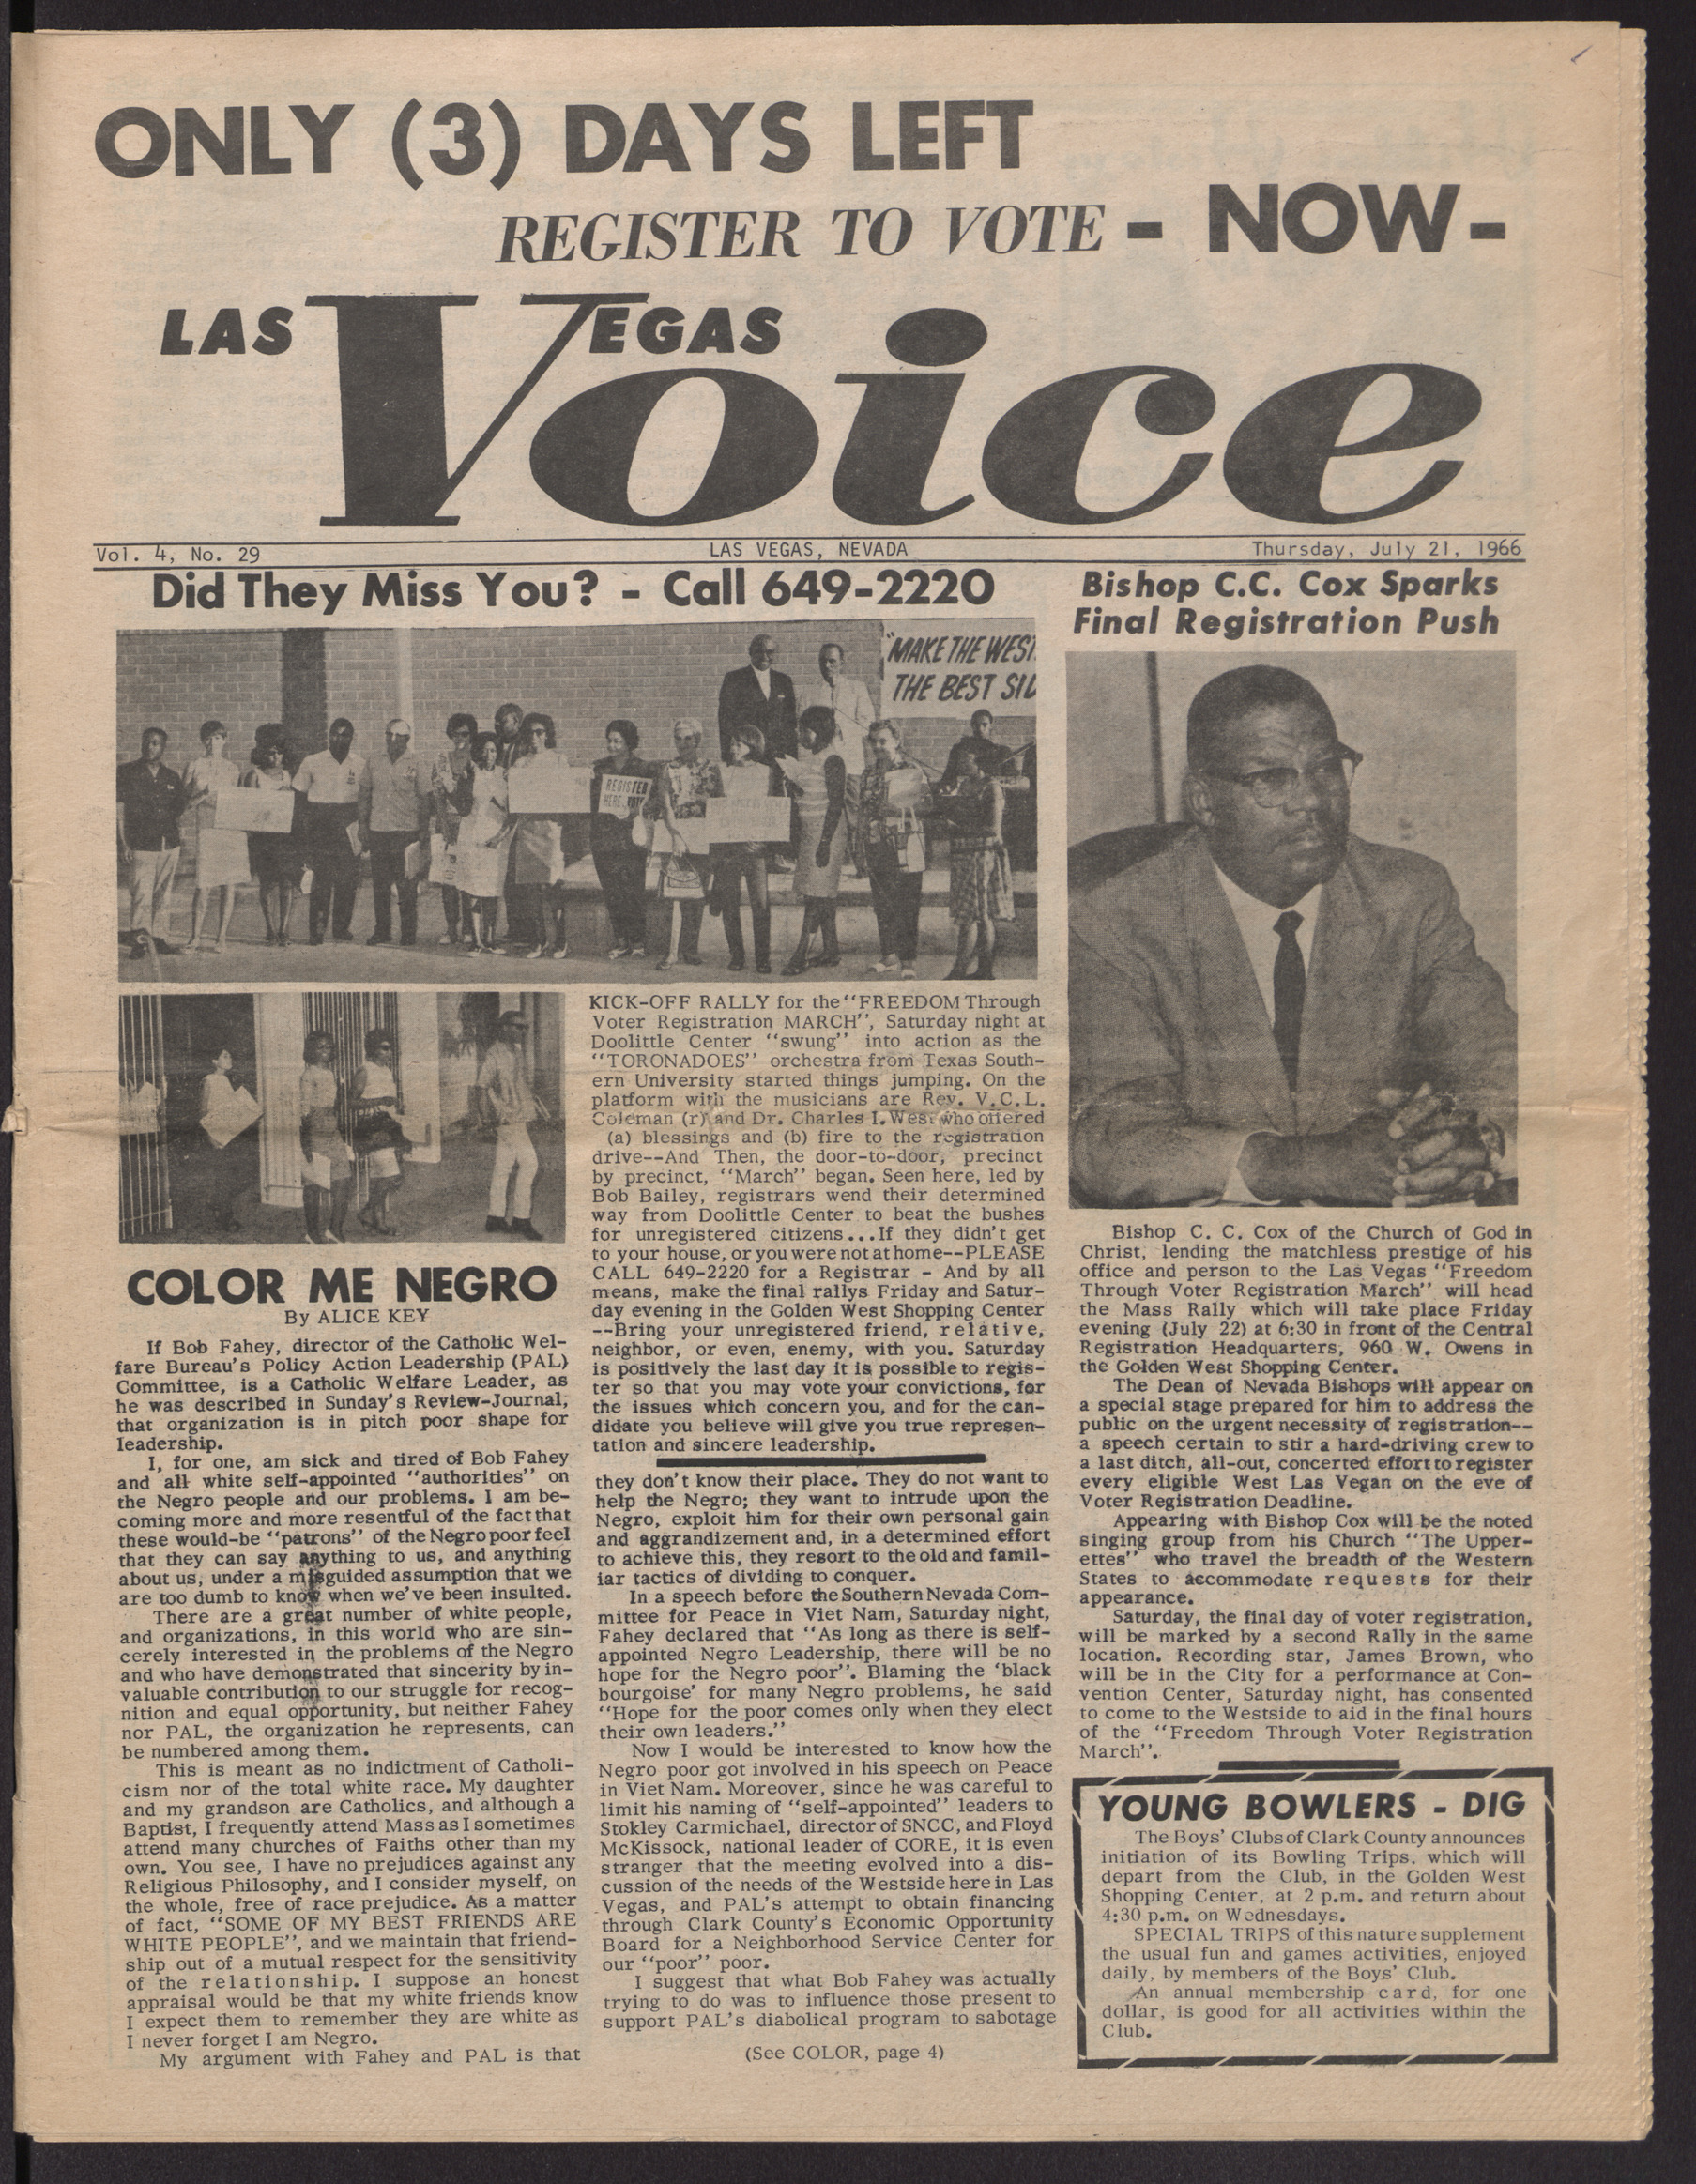 Newspaper, Las Vegas Voice, July 21, 1966